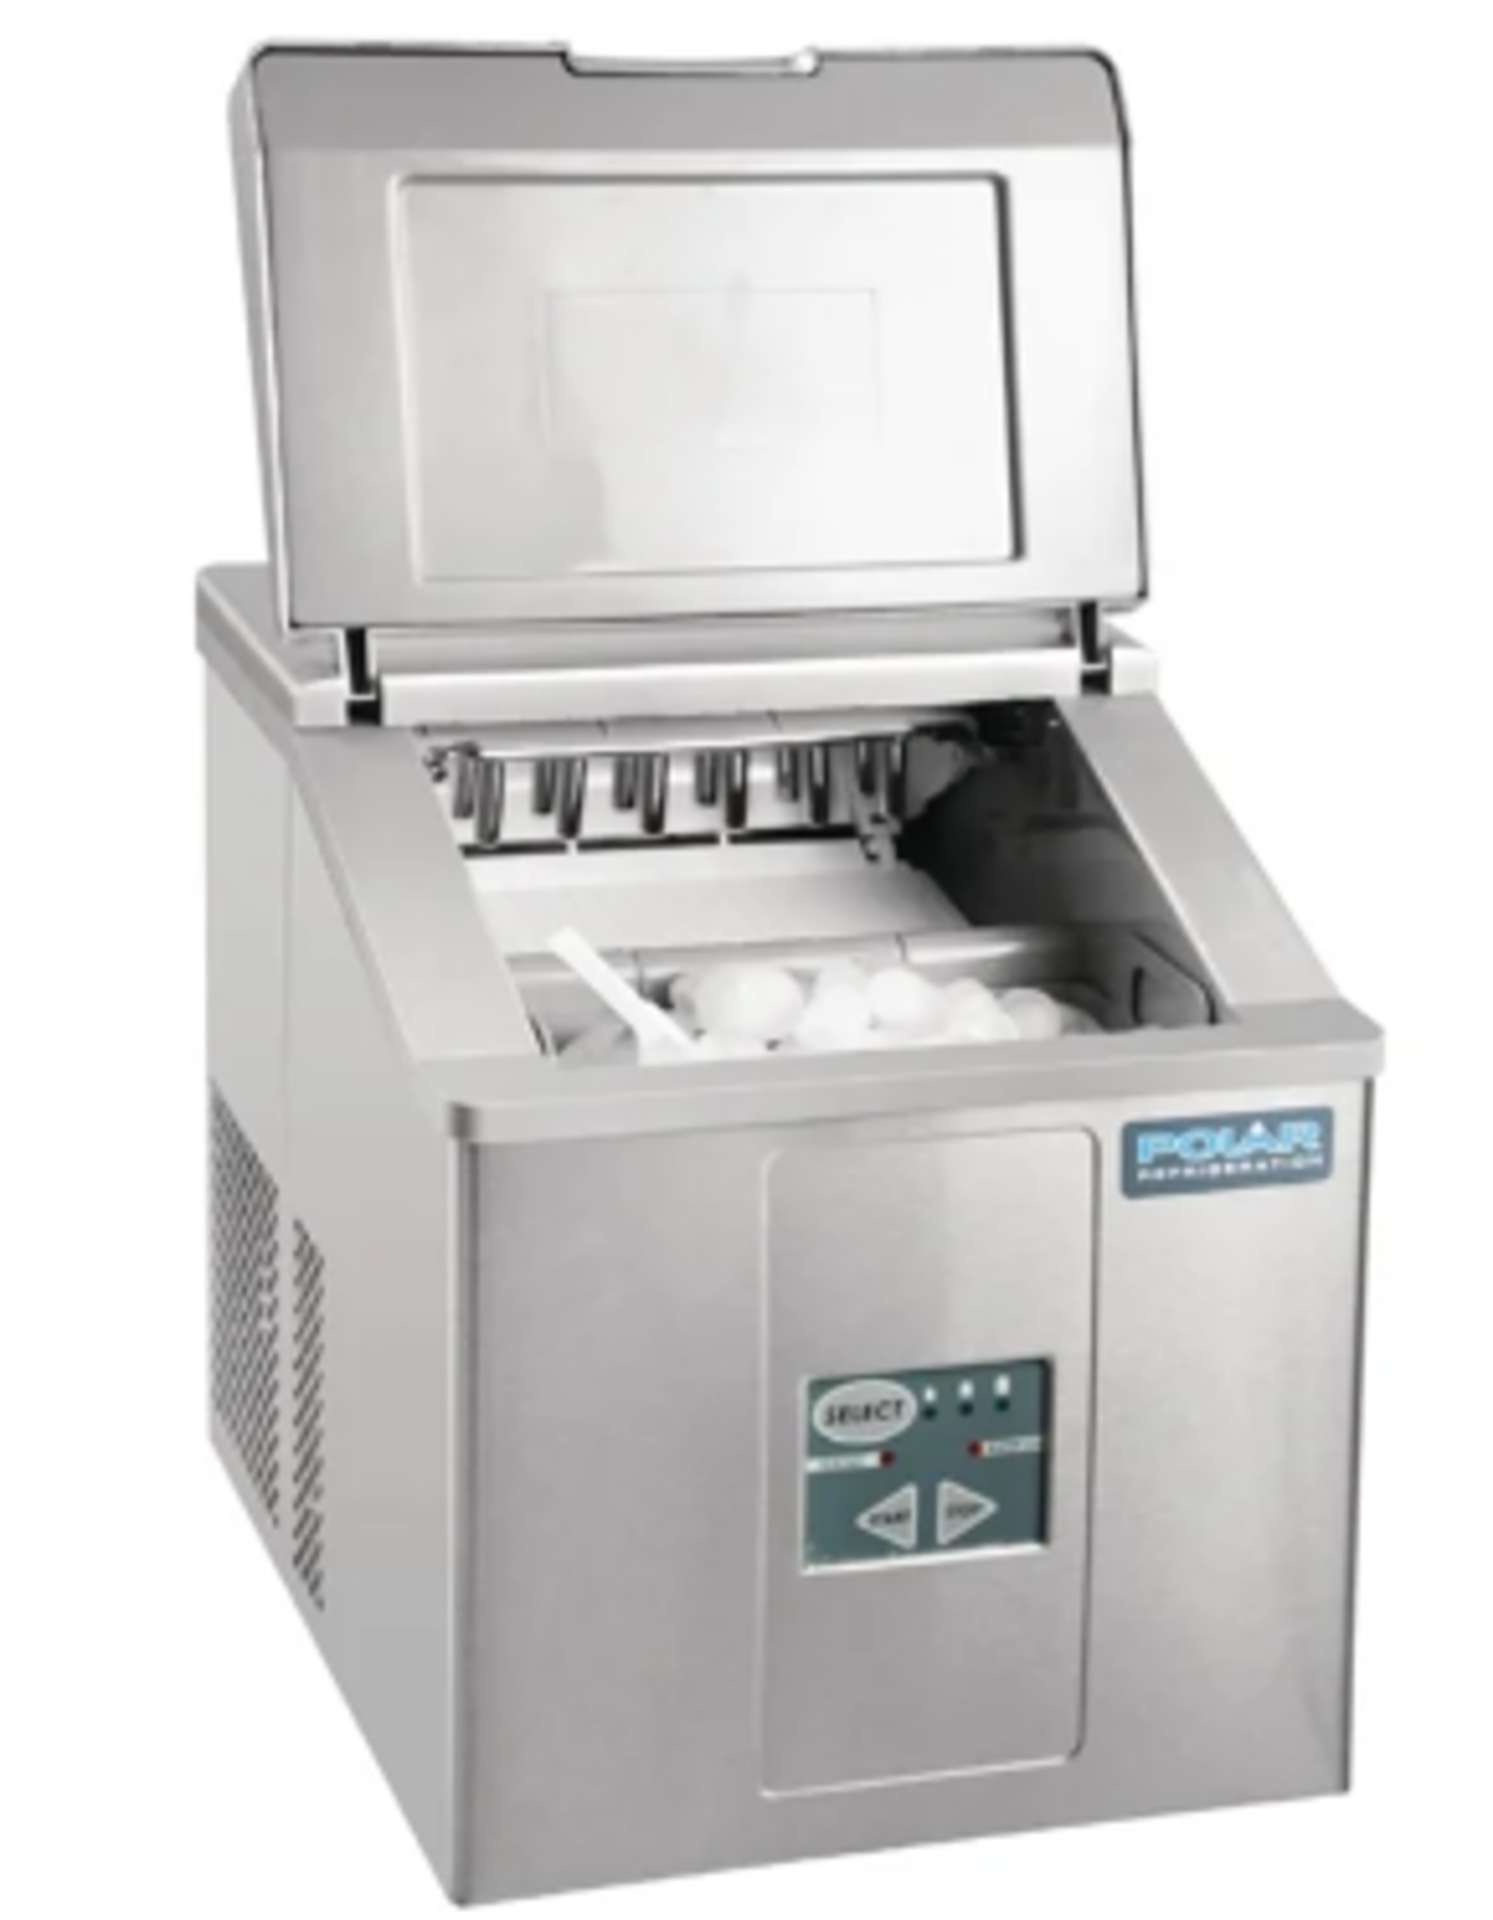 Polar C- Series Countertop Ice Machine x2 - Image 2 of 4